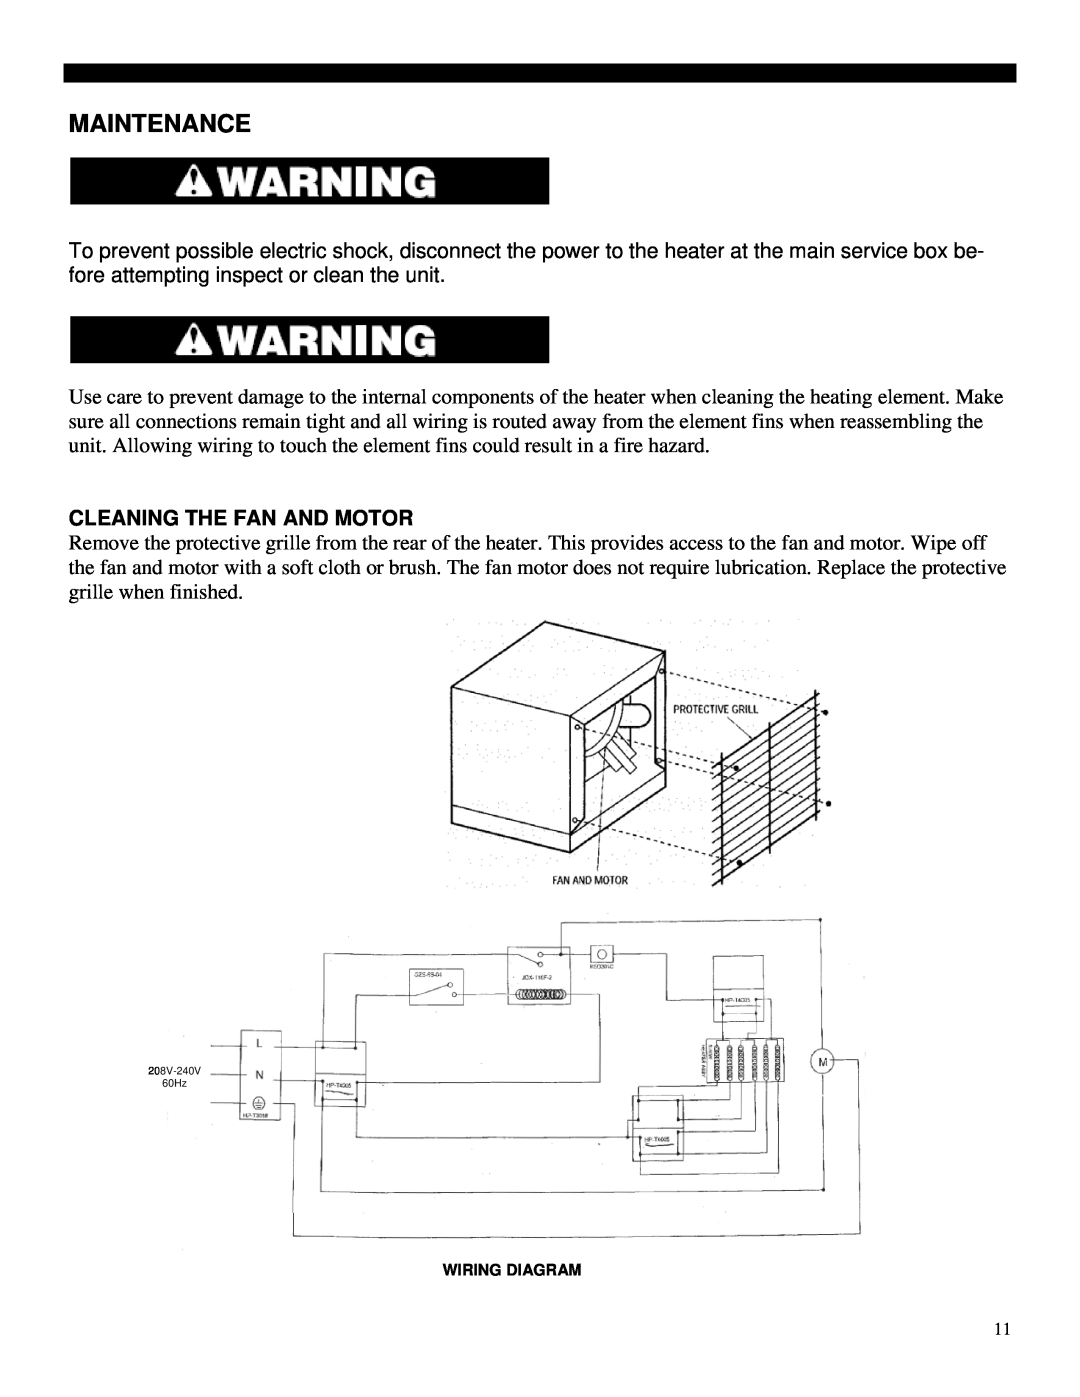 Soleus Air HI1-50-03 manual Maintenance, Cleaning The Fan And Motor 